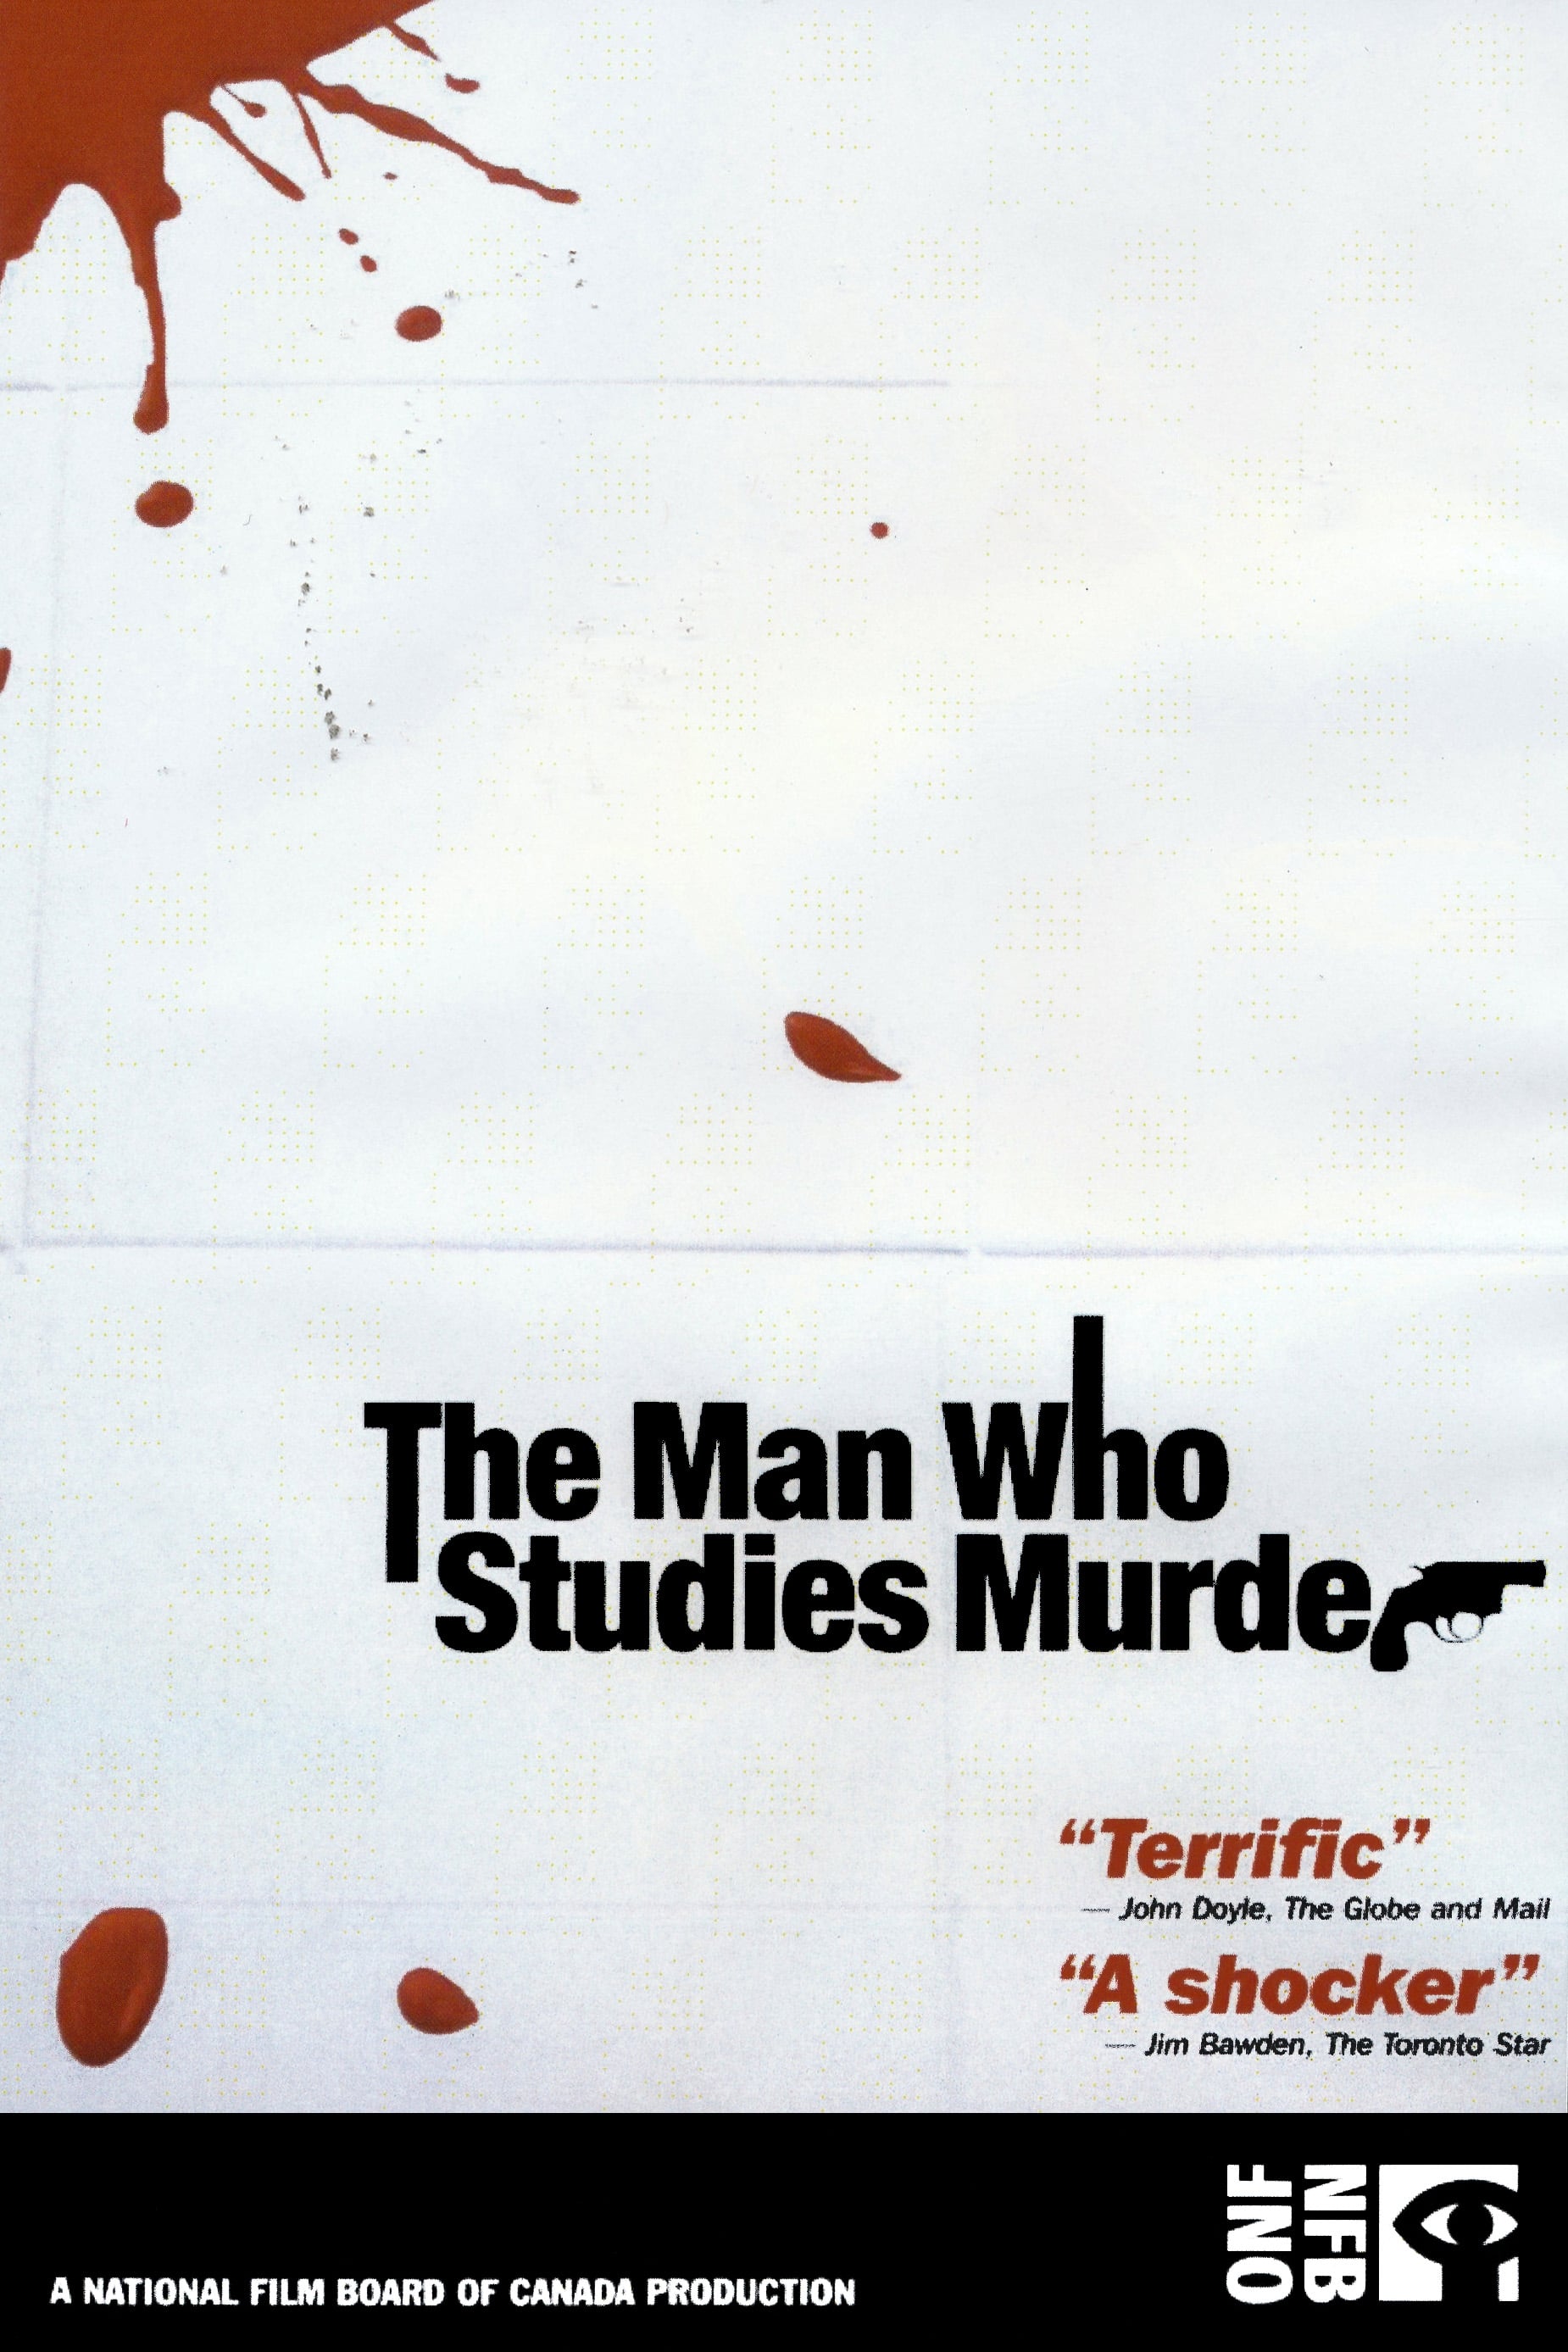 The Man Who Studies Murder